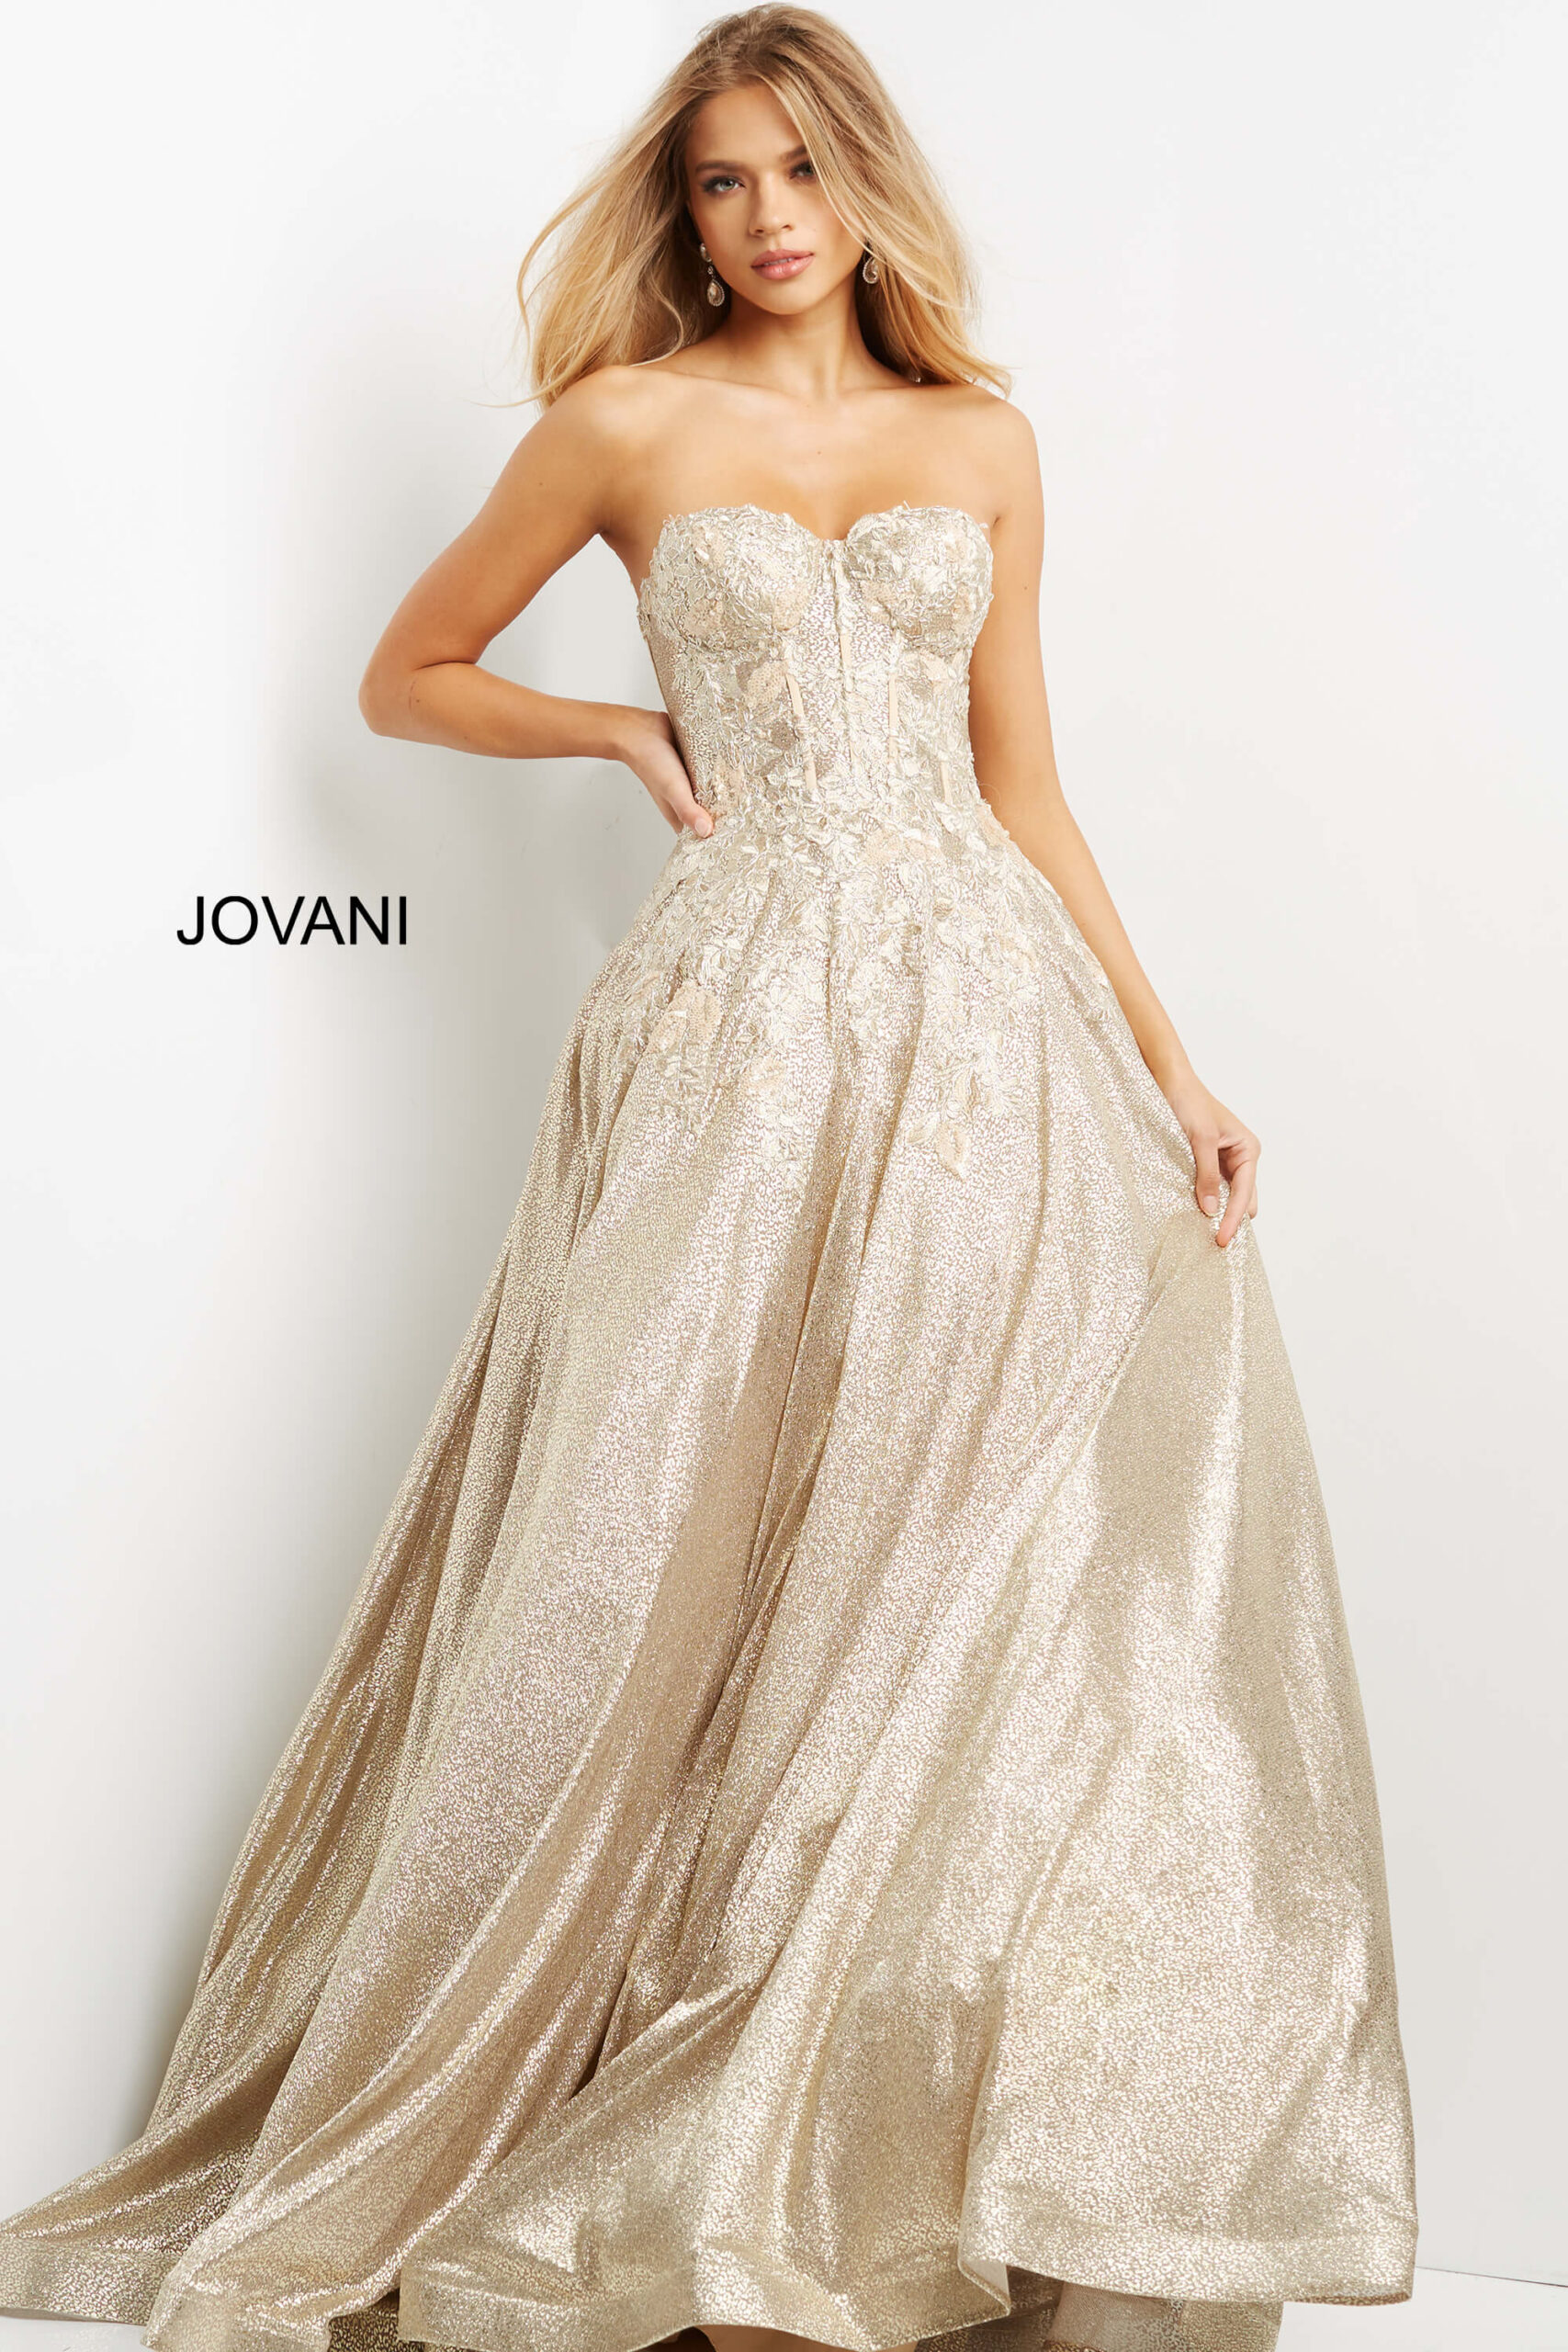 Jovani 07497 Gold Lace Corset Bodice Ballgown